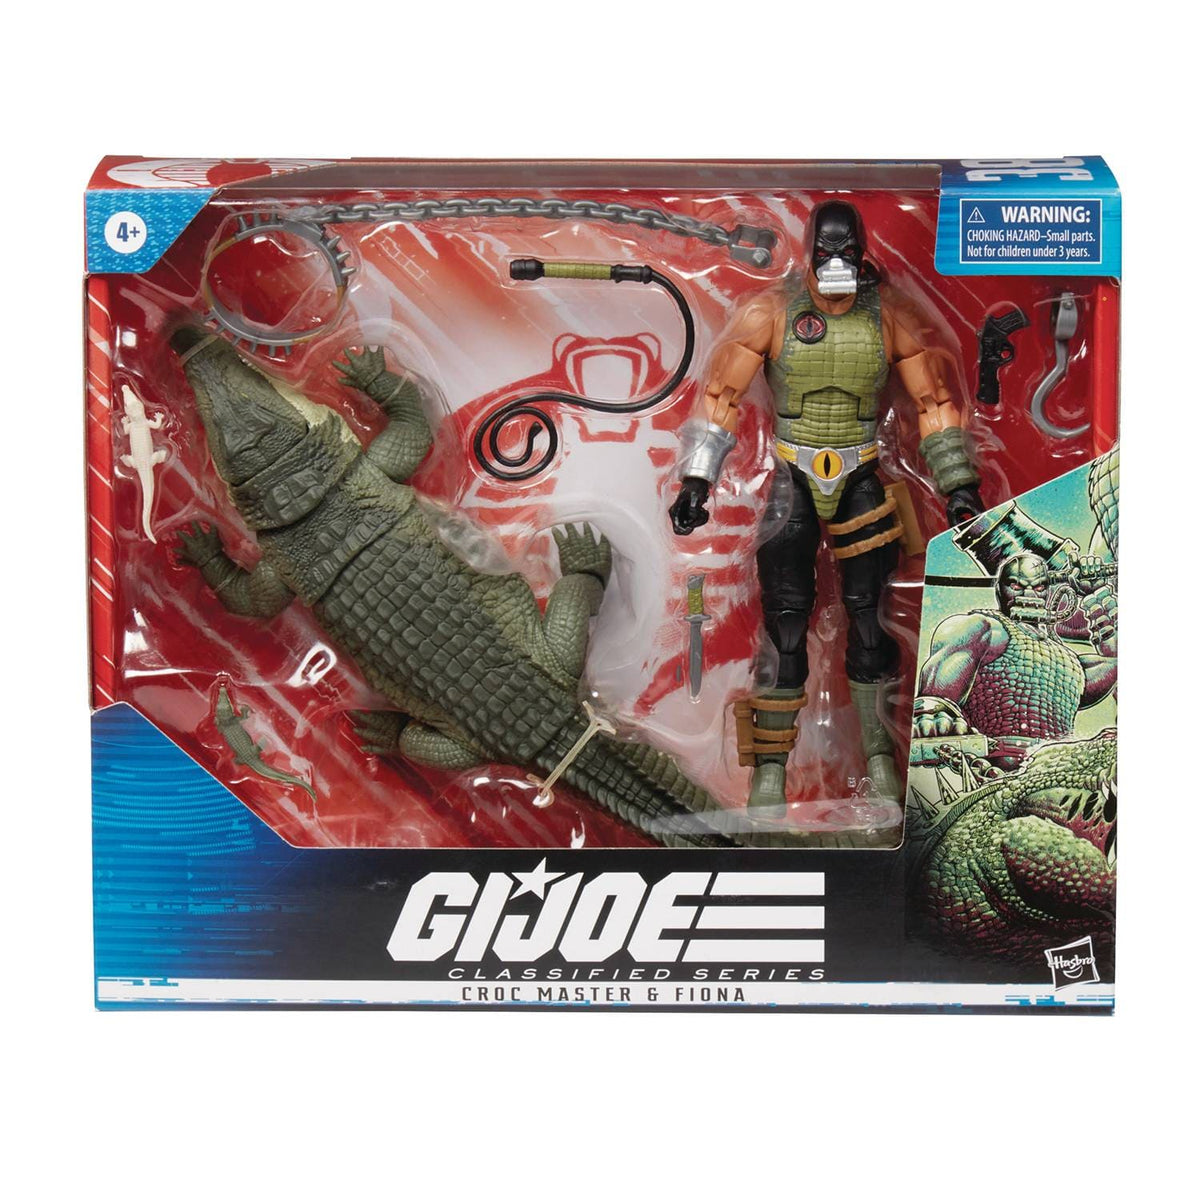 Hasbro: GI Joe Classified - Croc Master & Fiona 6"